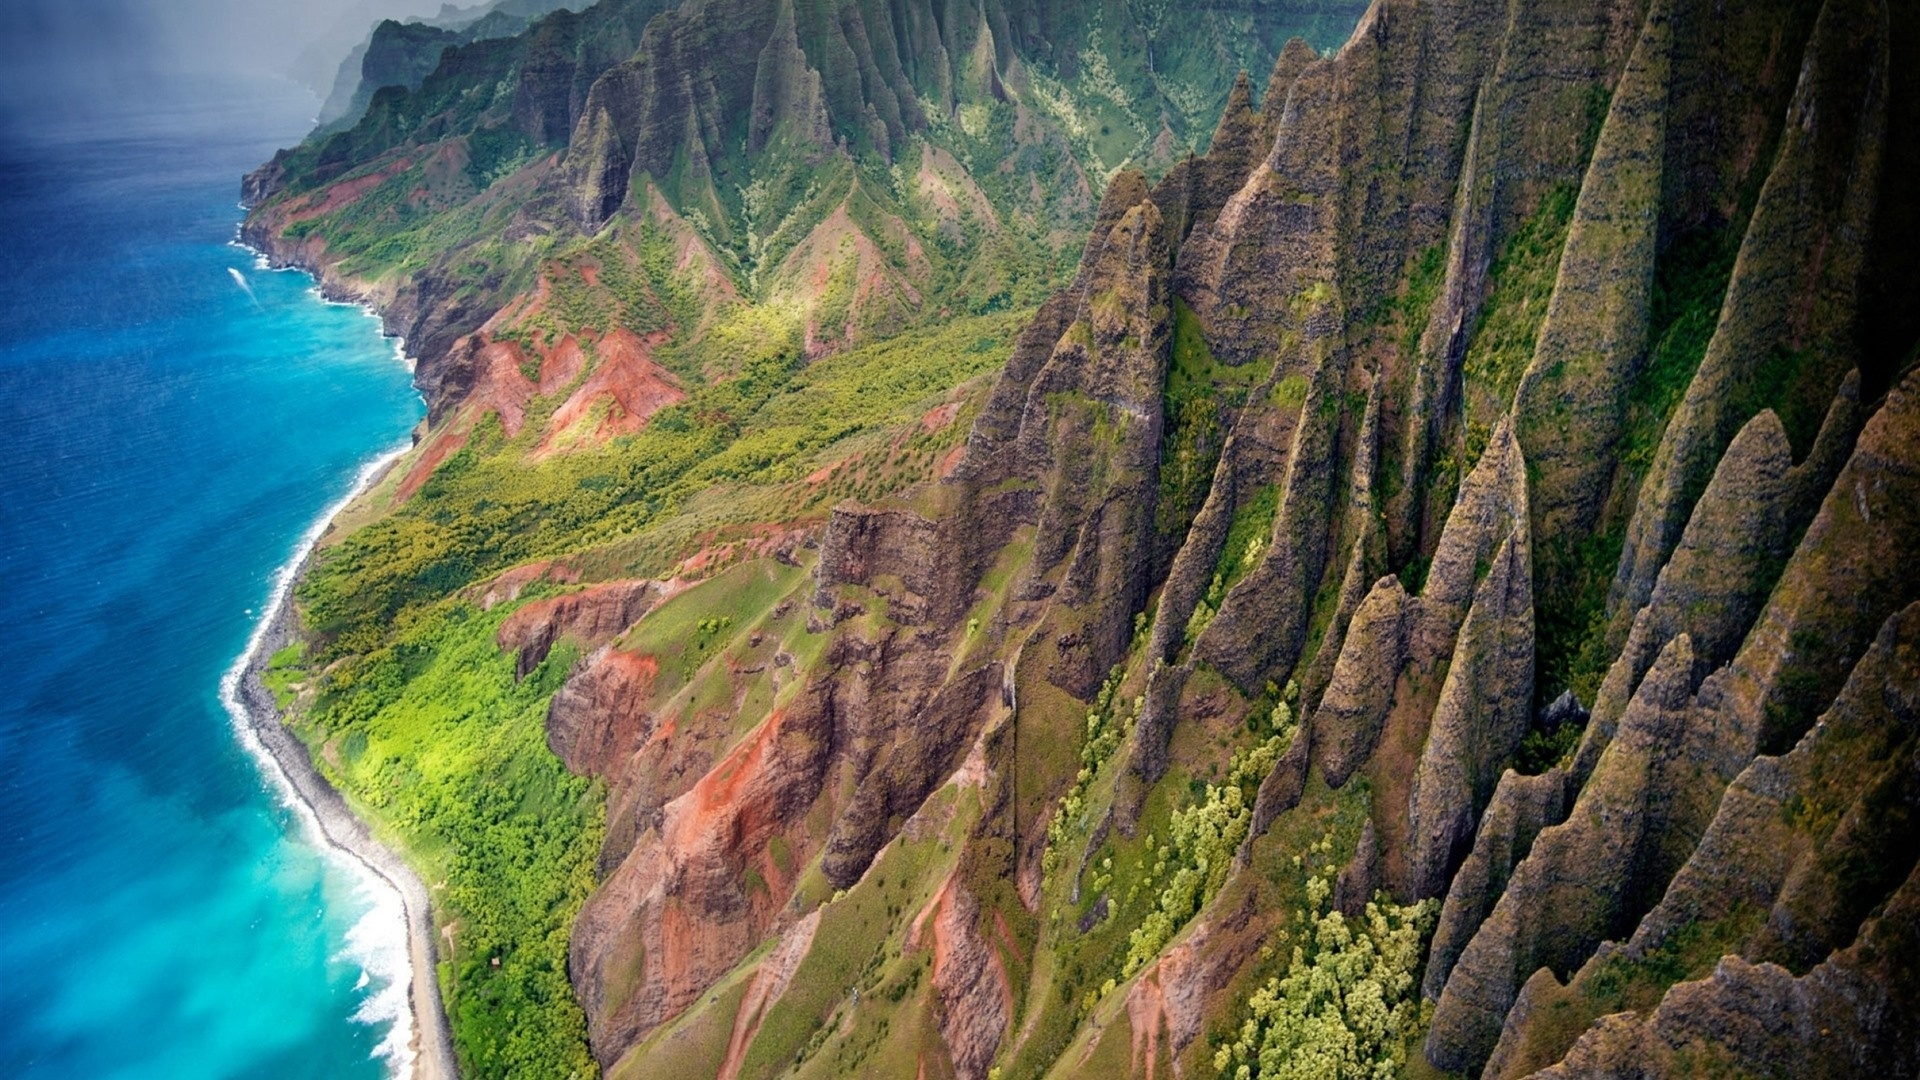 Kauai Mountain desktop wallpaper hd